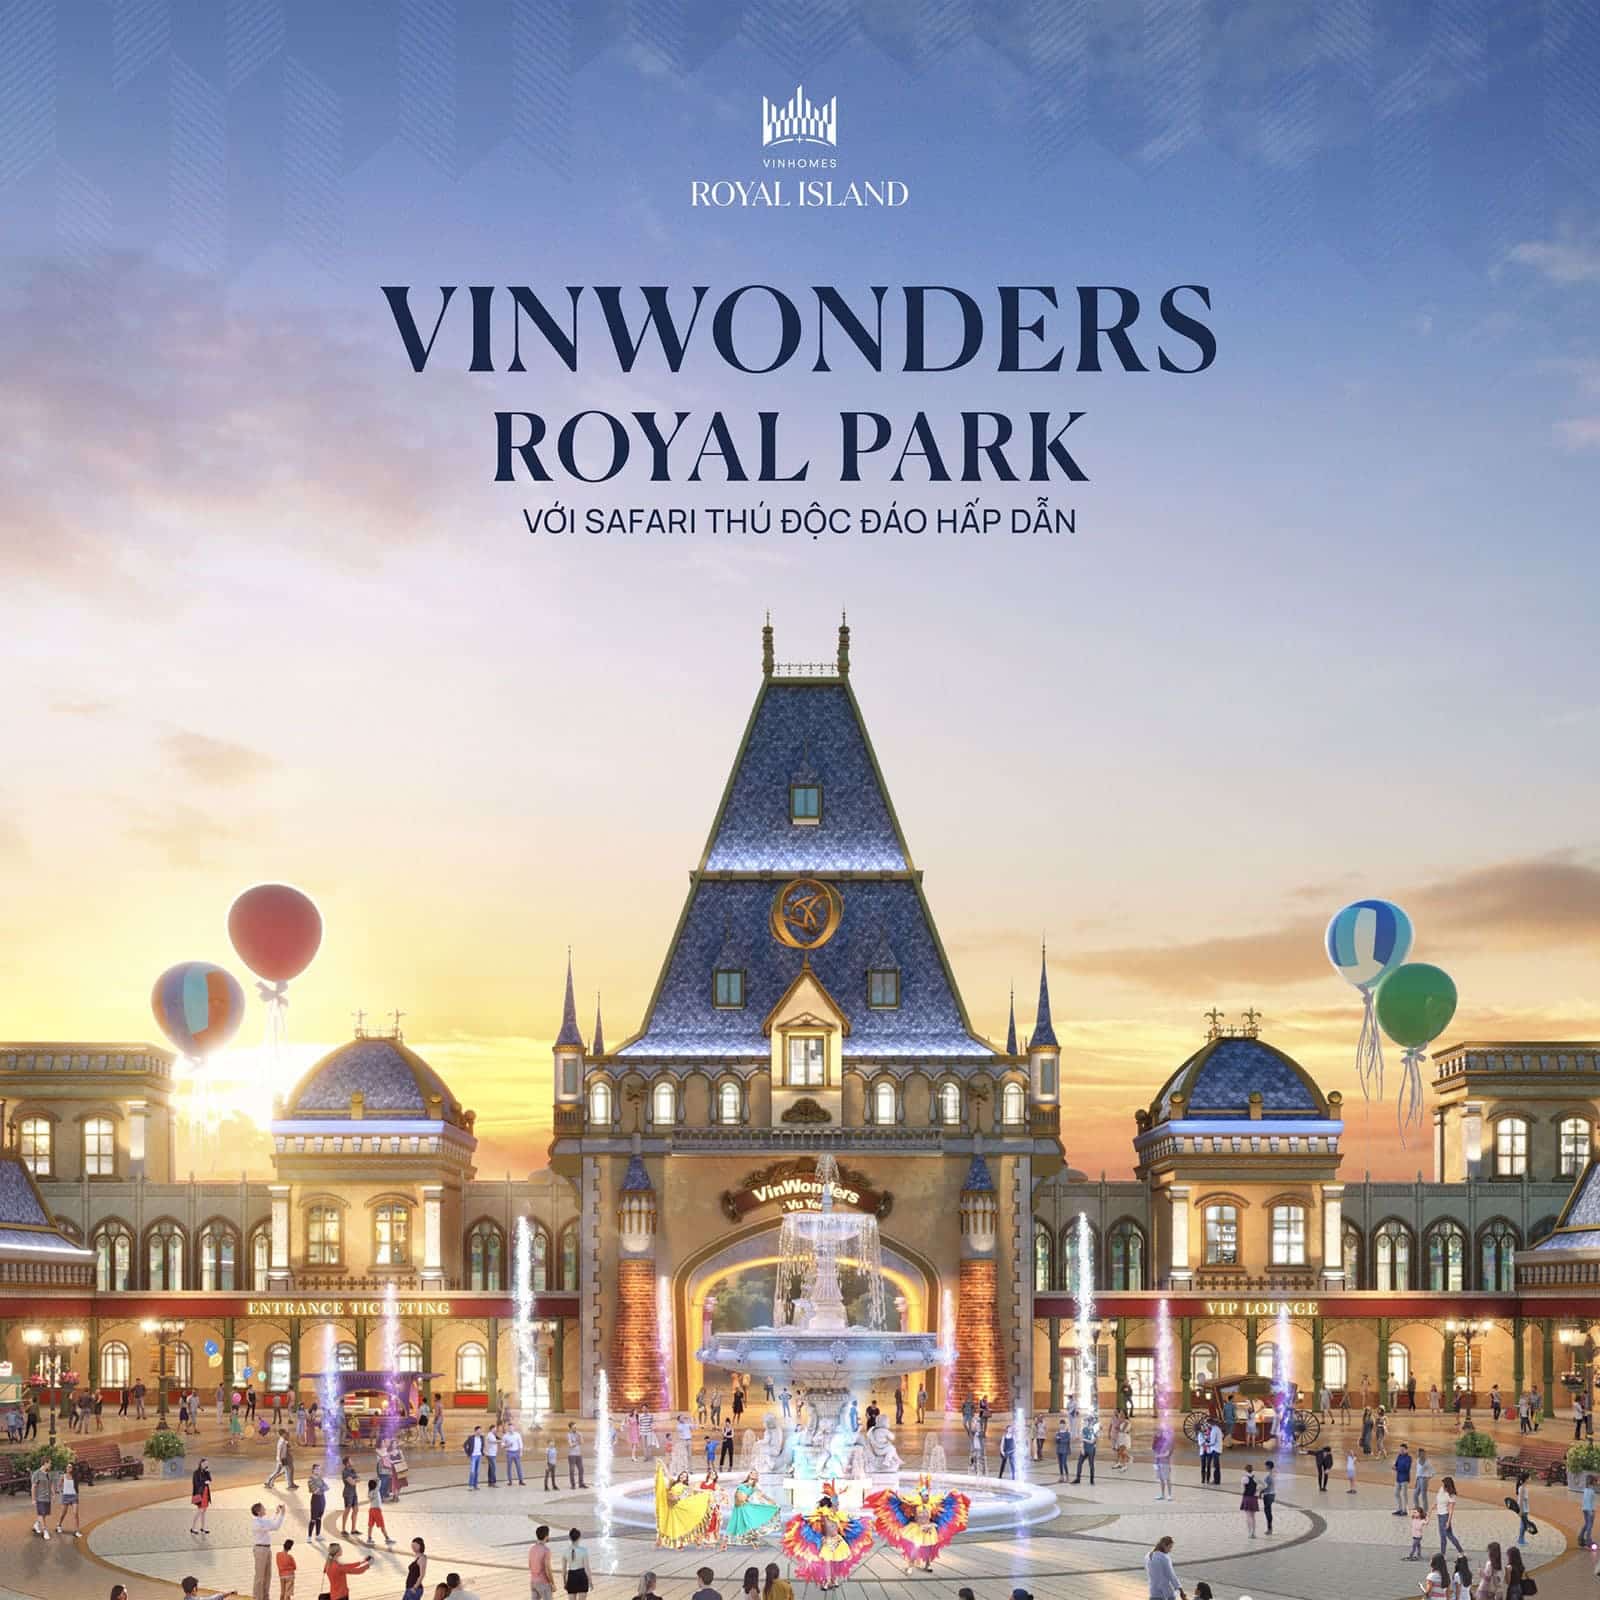 Vinwonder royal park